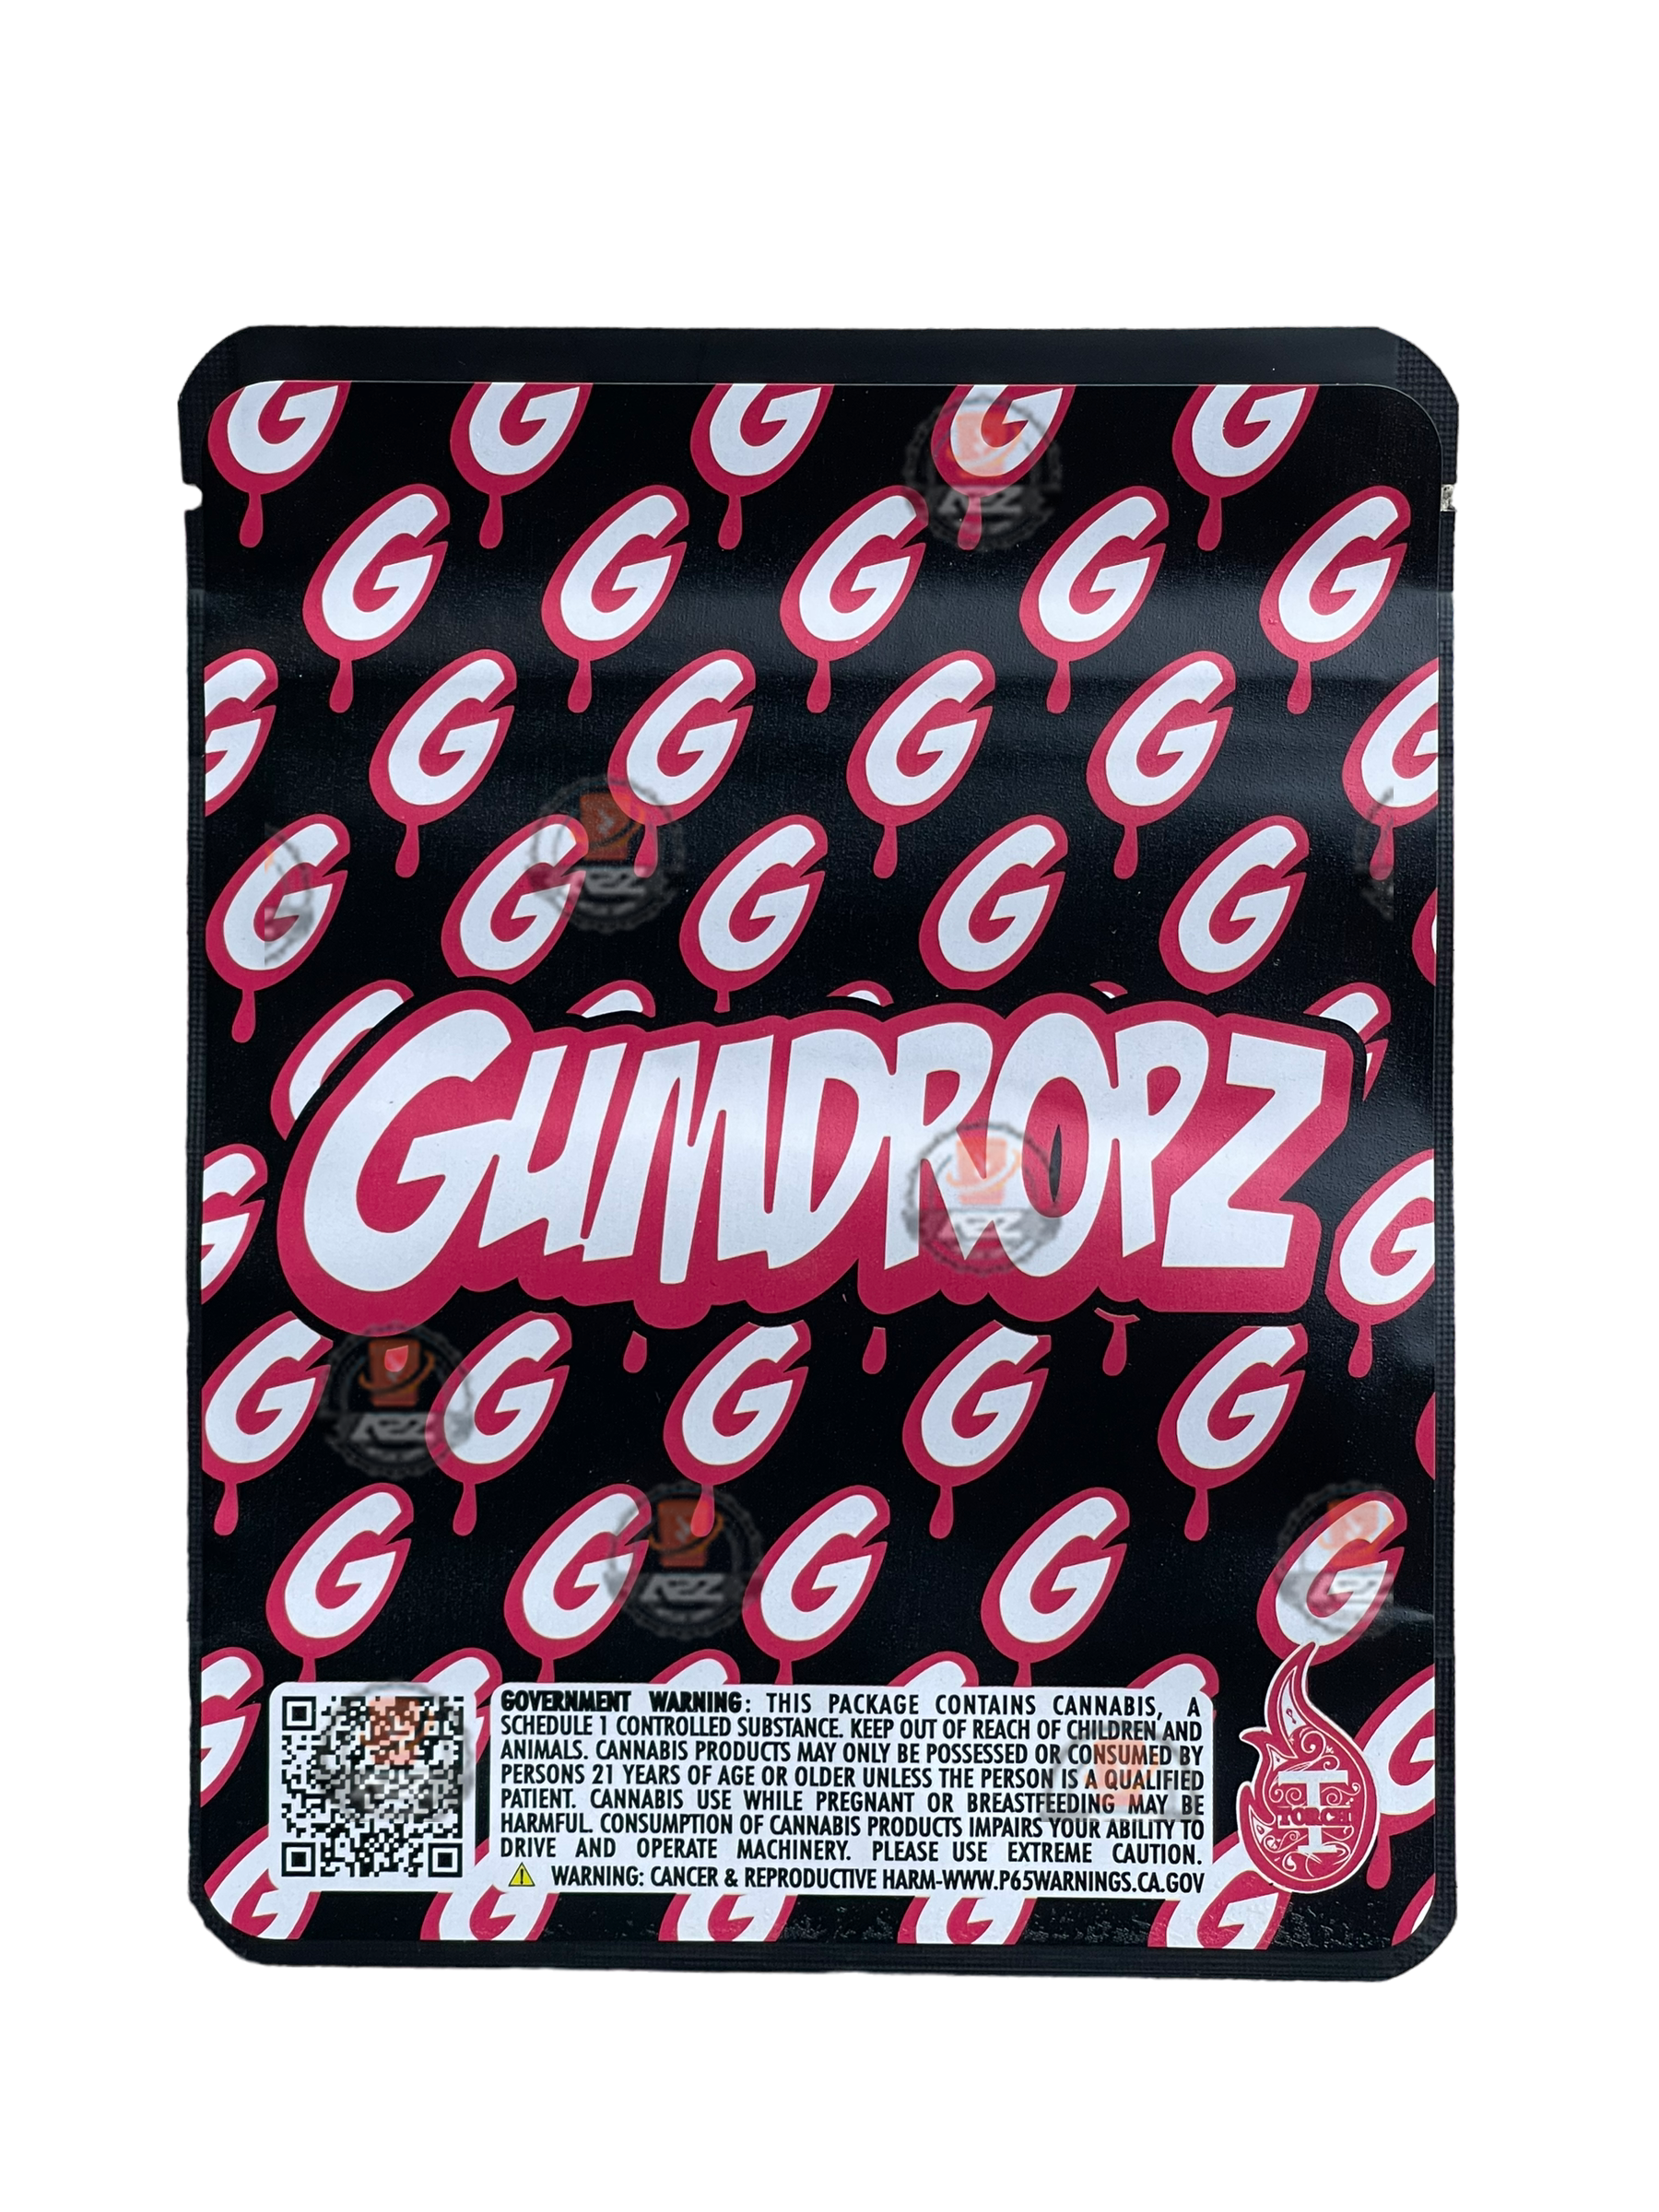 Sprinklez Gumdropz Strawberry Banana Mylar Bags 3.5g Sticker base Bag -With stickers and labels